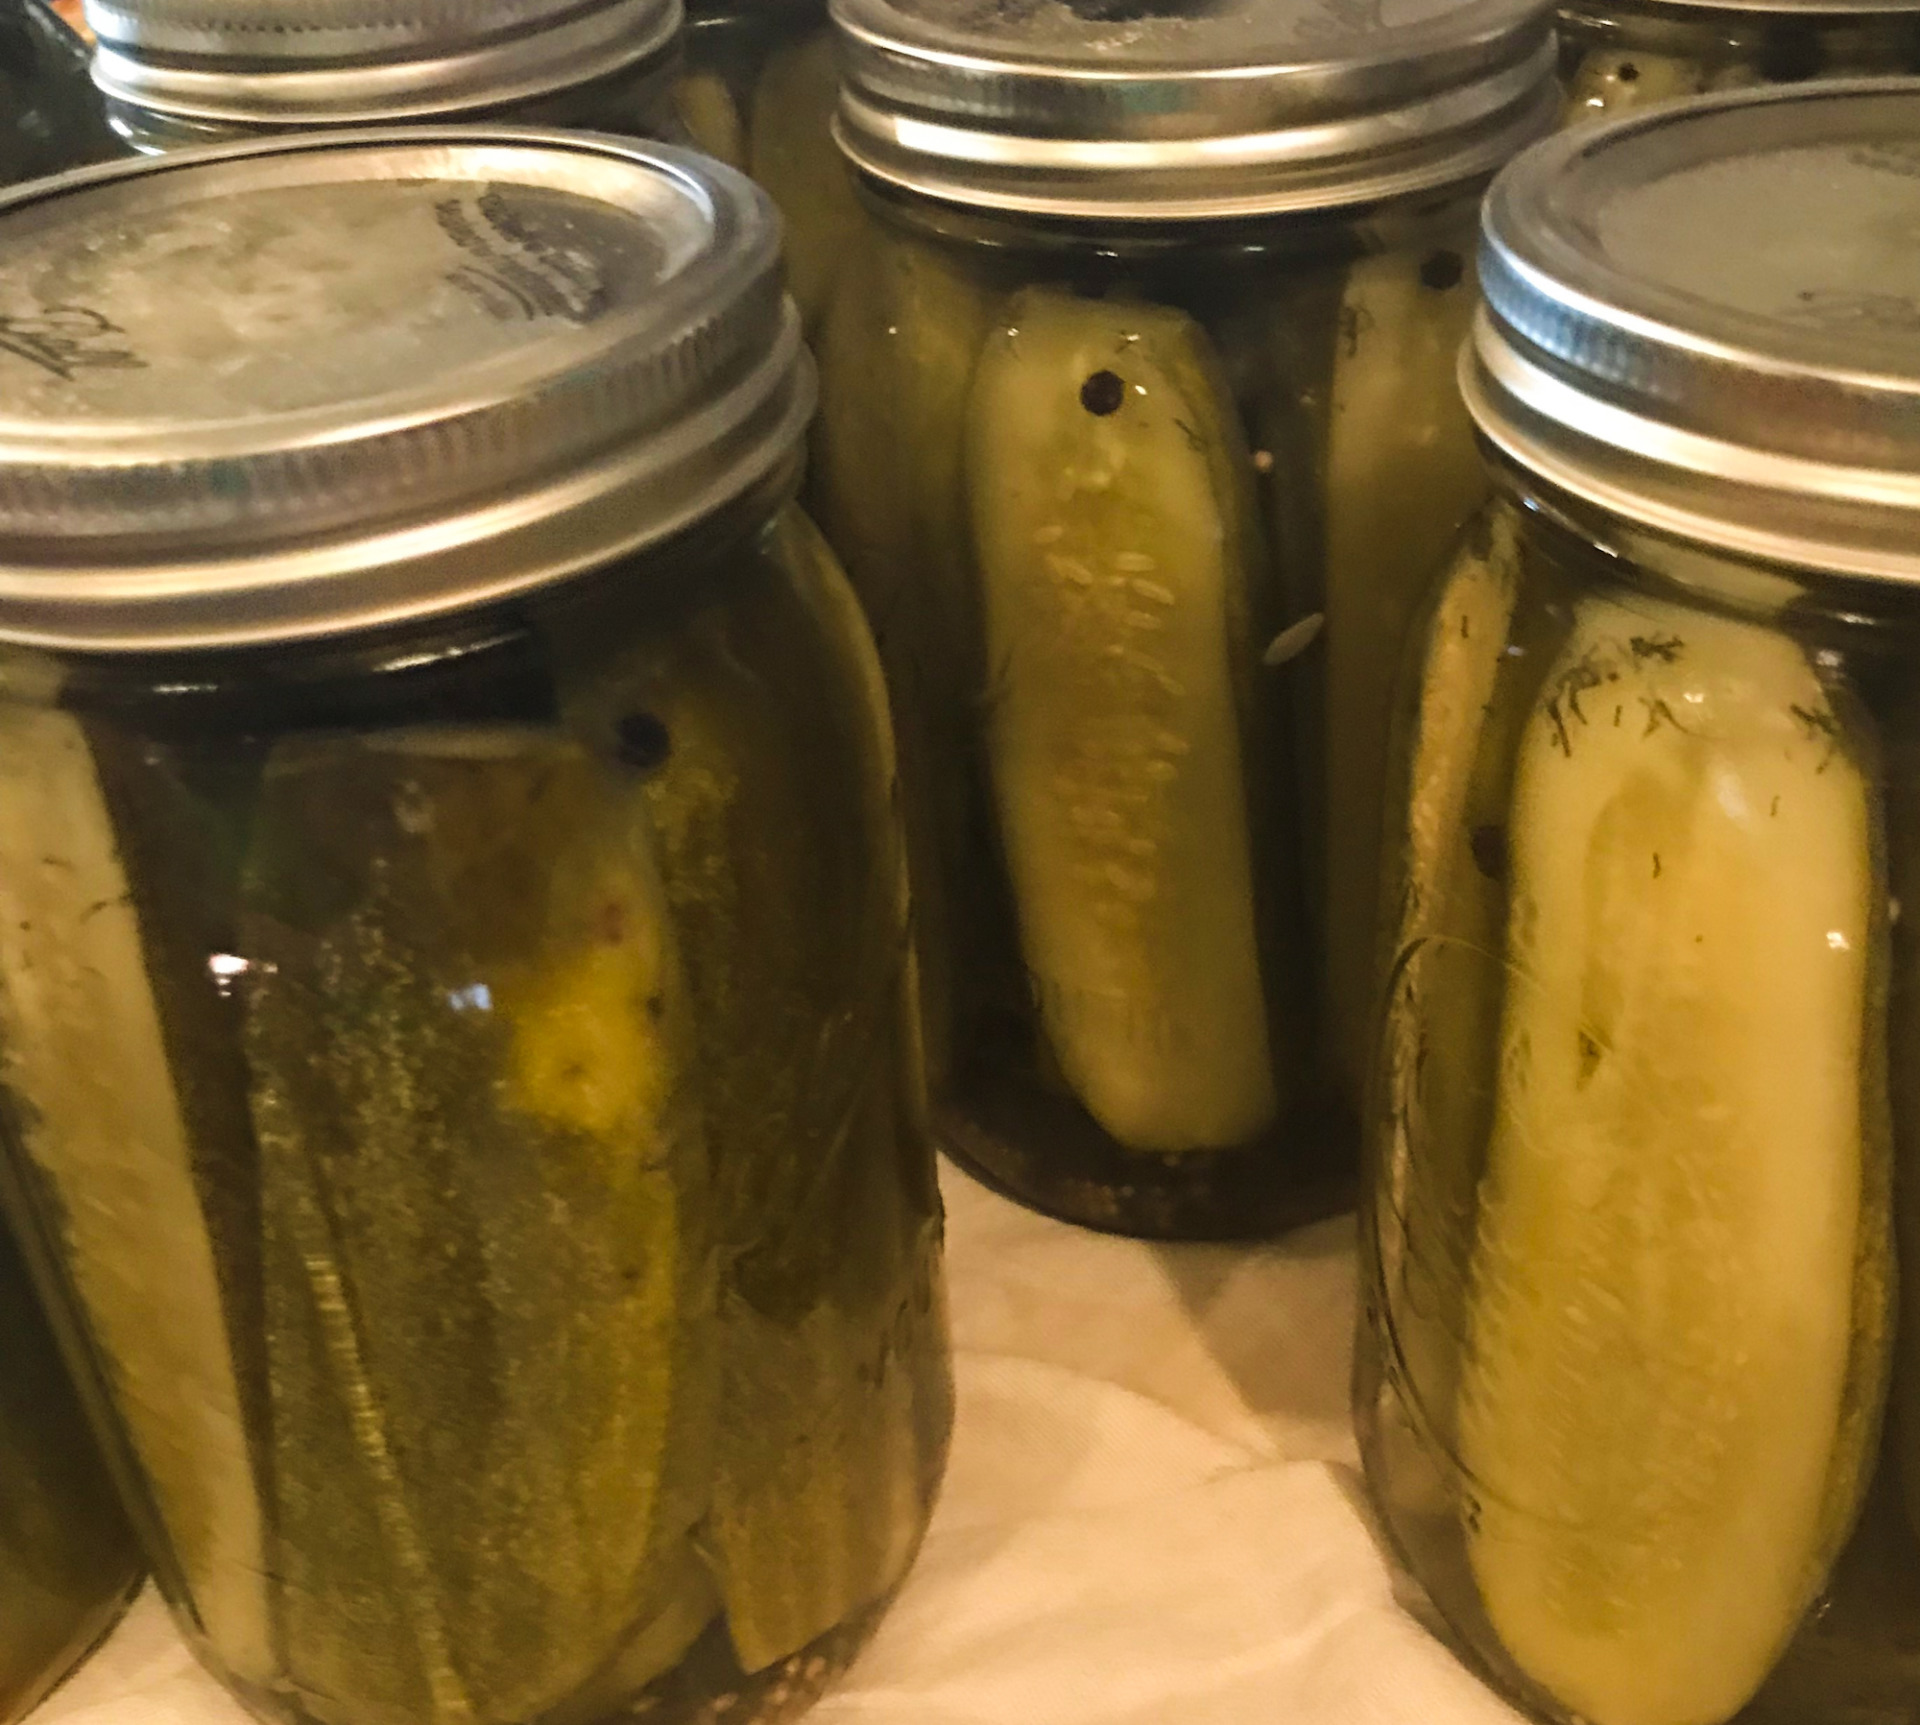 https://agrilifetoday.tamu.edu/wp-content/uploads/2020/07/pickles-2_edited.jpg